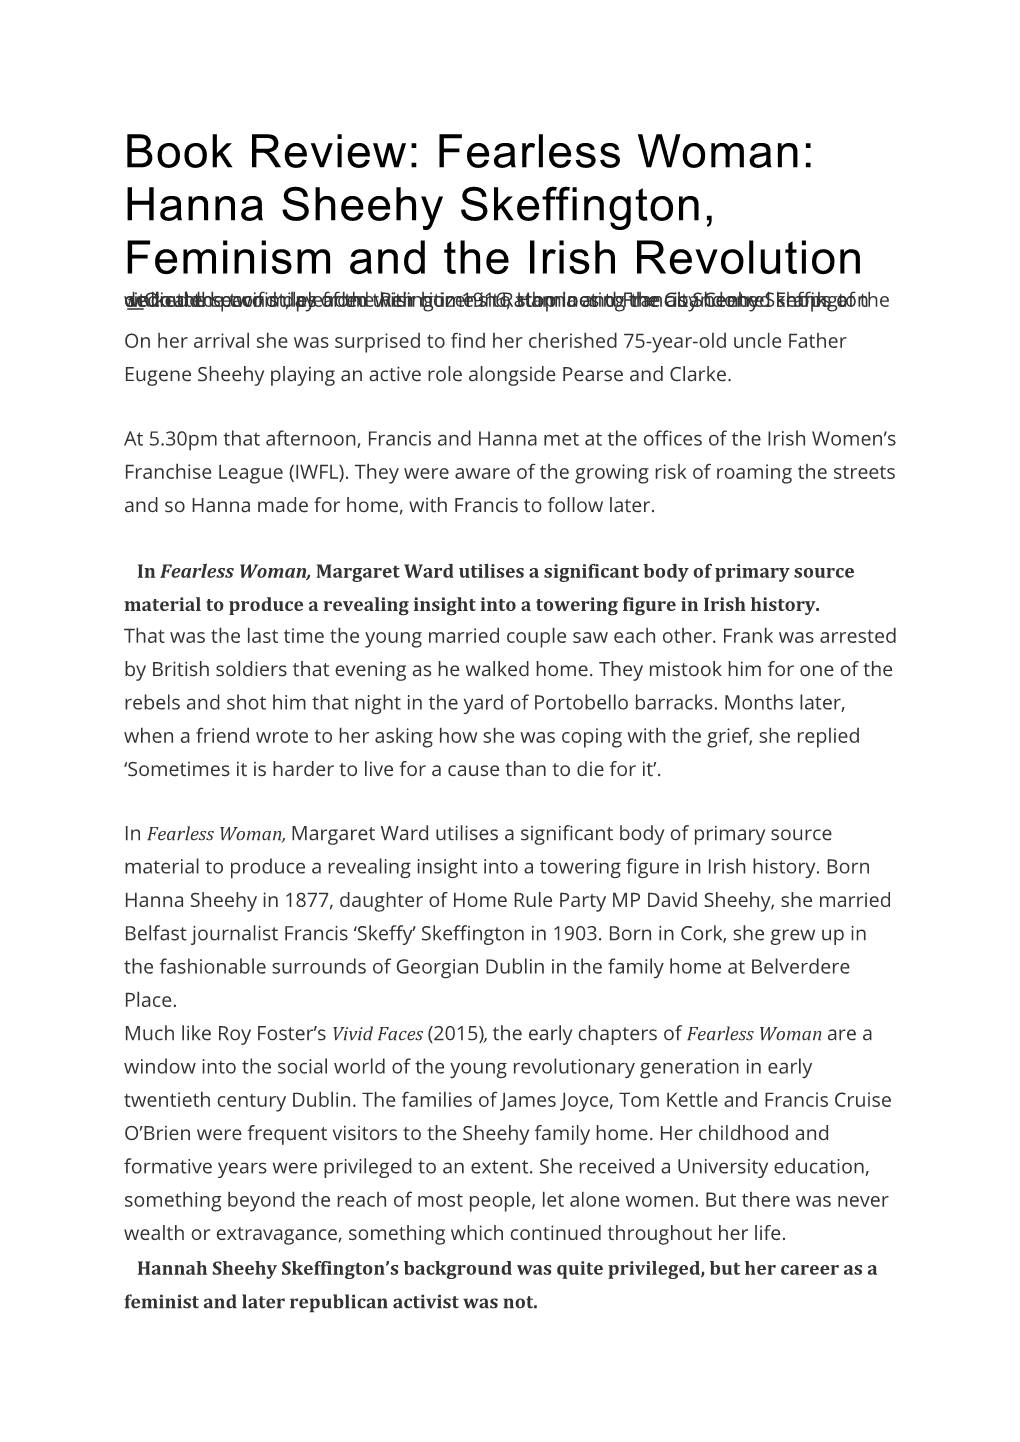 Hanna Sheehy Skeffington, Feminism and the Irish Revolution